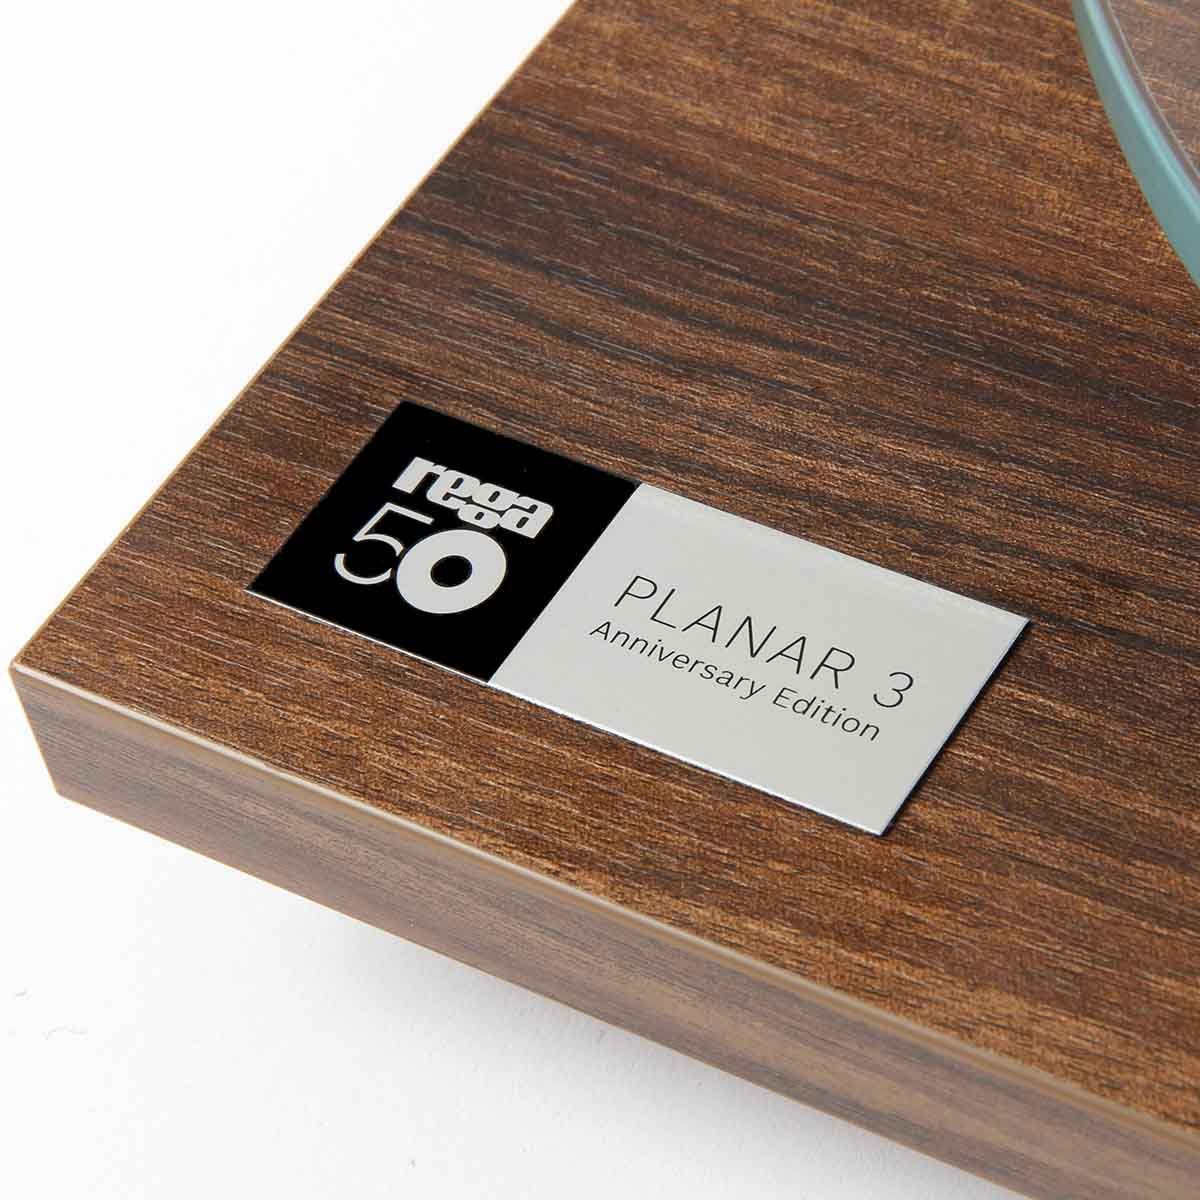 Rega Planar 3 50th Anniversary Edition Turntable - Walnut close-up of 50th Anniversary badge on plinth